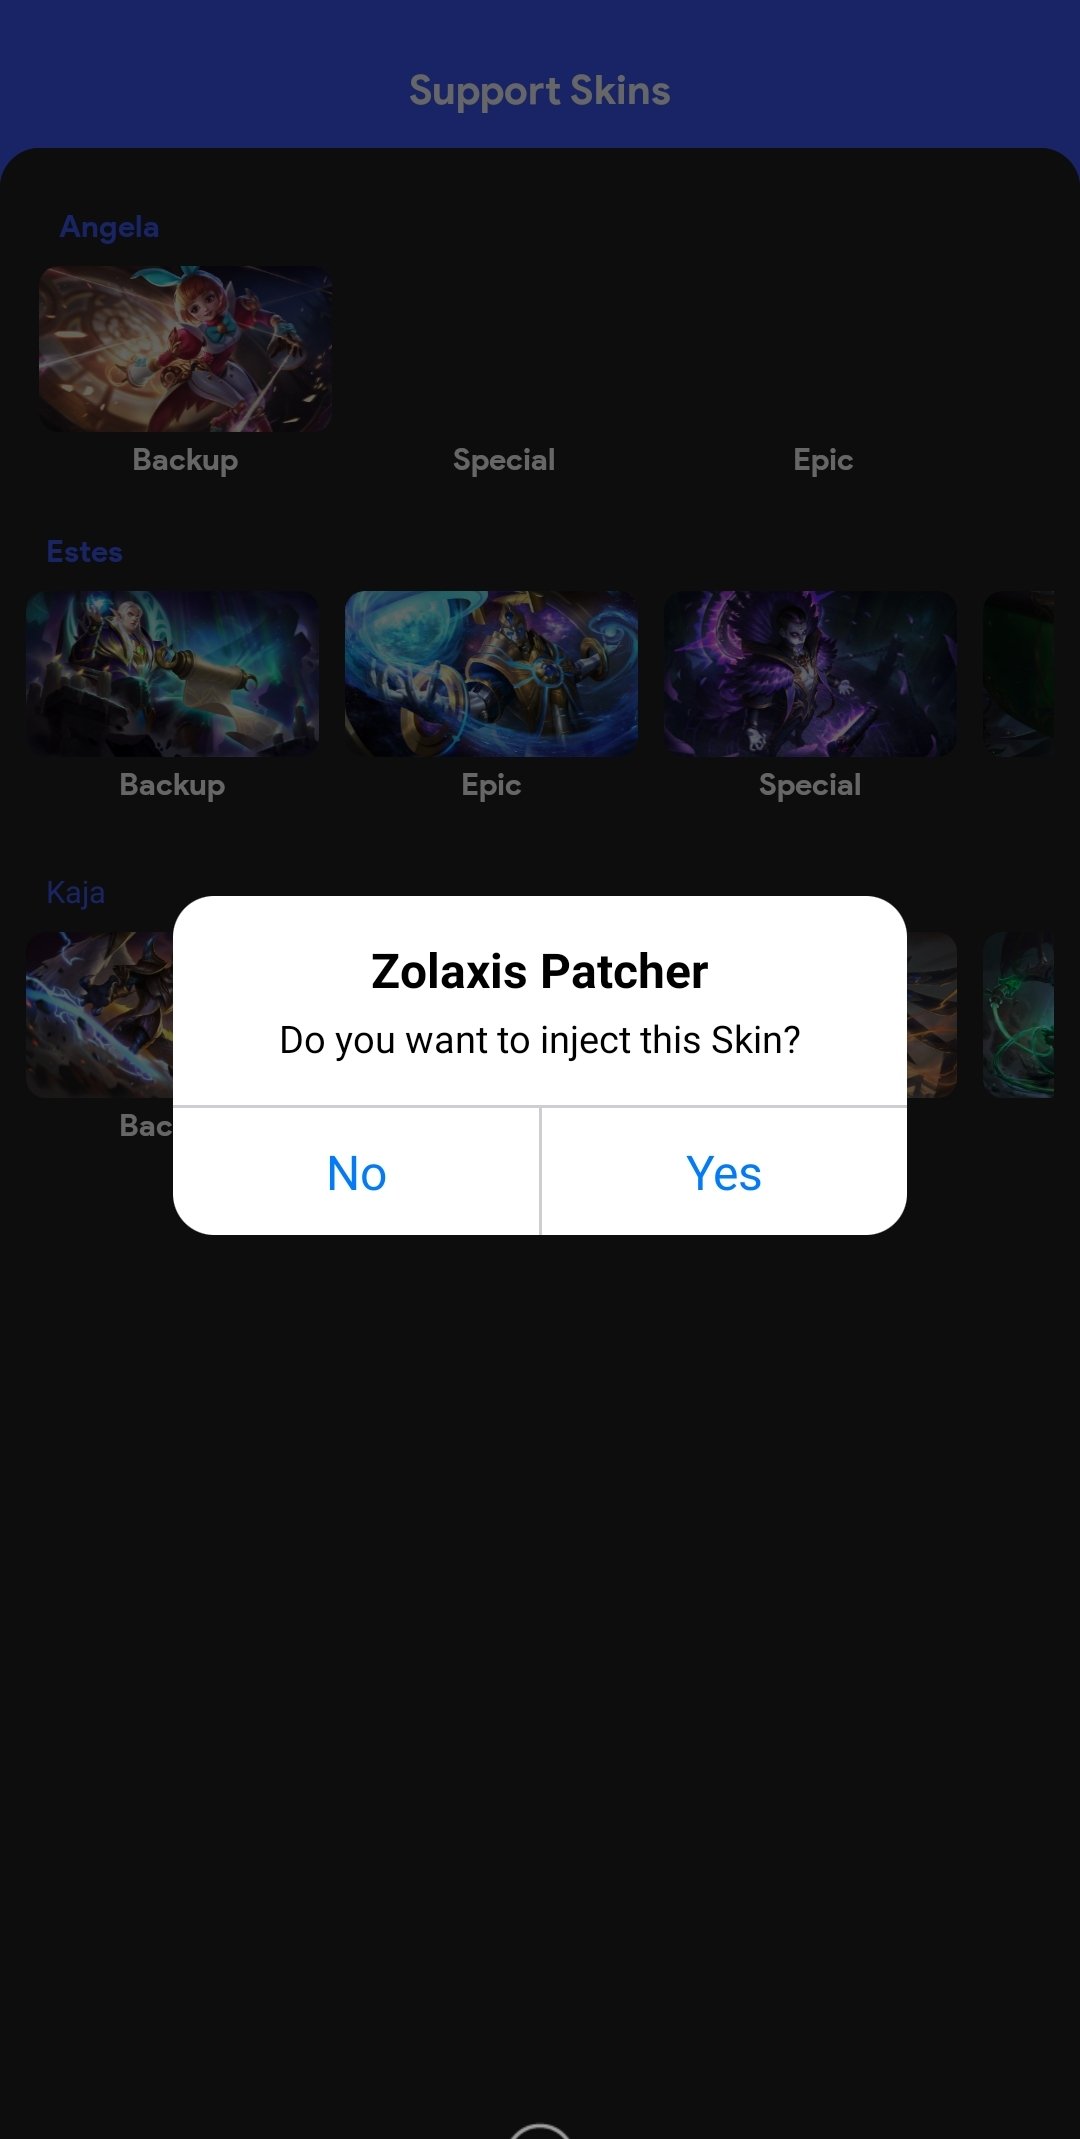 2021 zolaxis patcher Zolaxis Patcher: